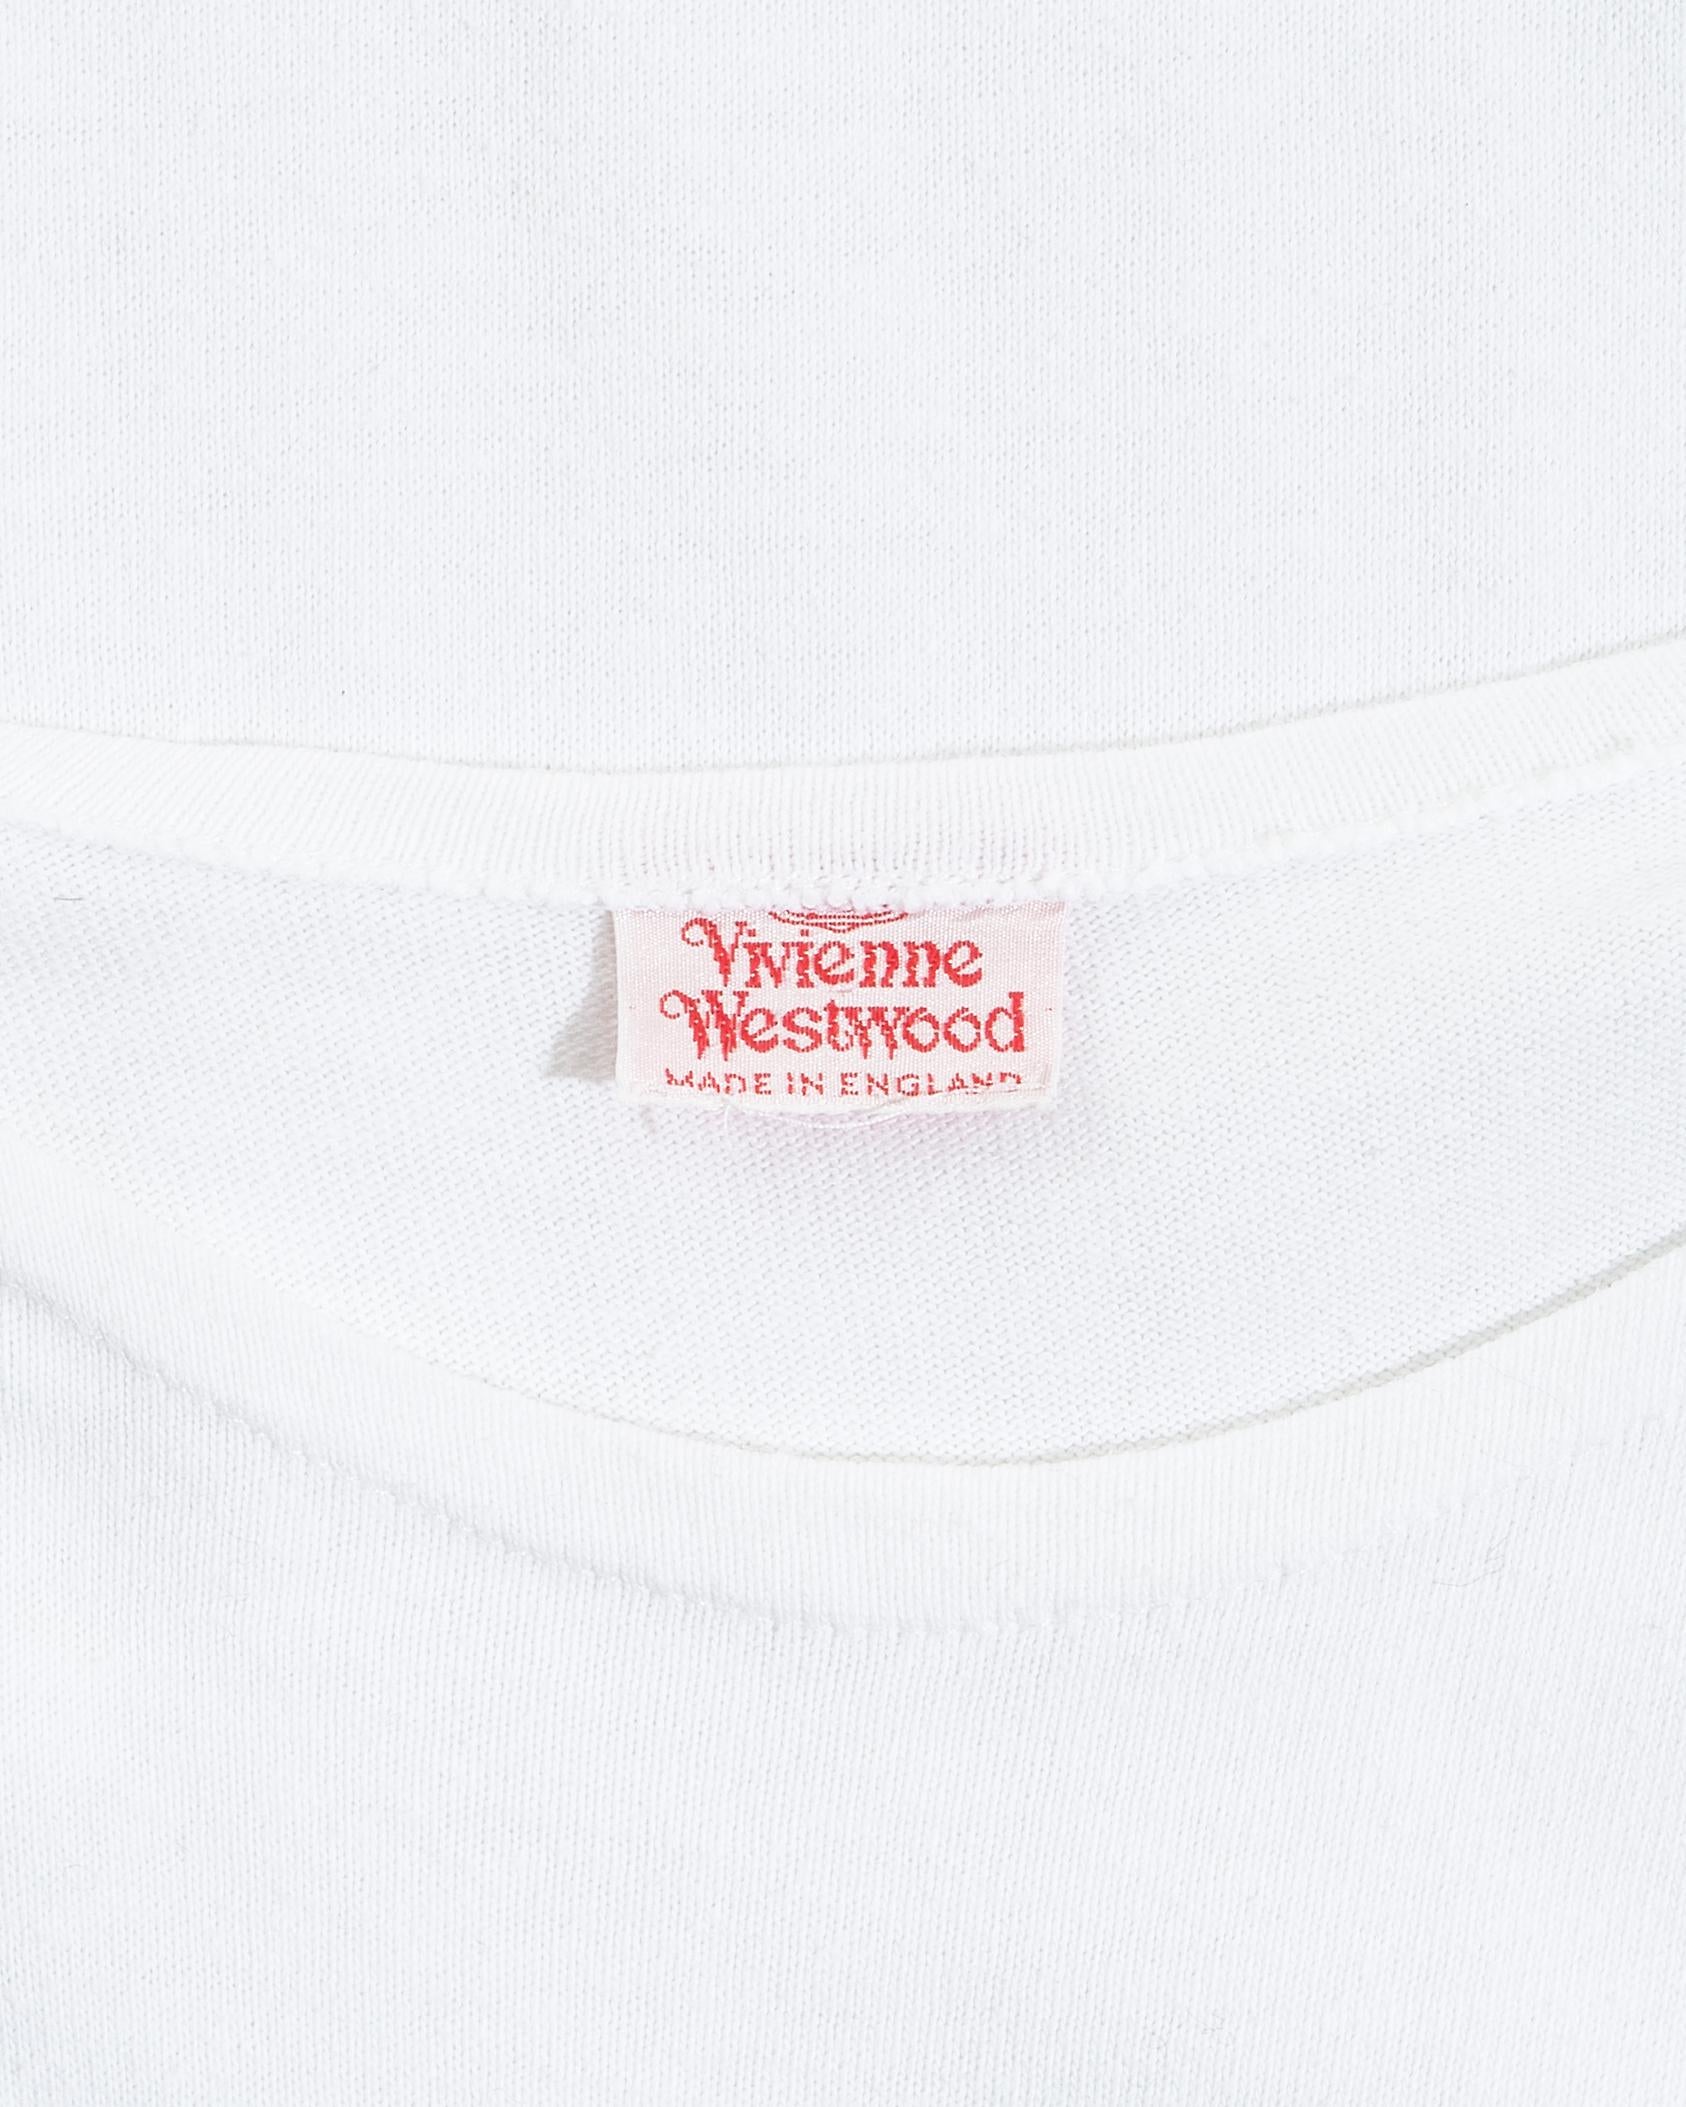 Women's Vivienne Westwood white cotton jersey dress, ss 1989 For Sale